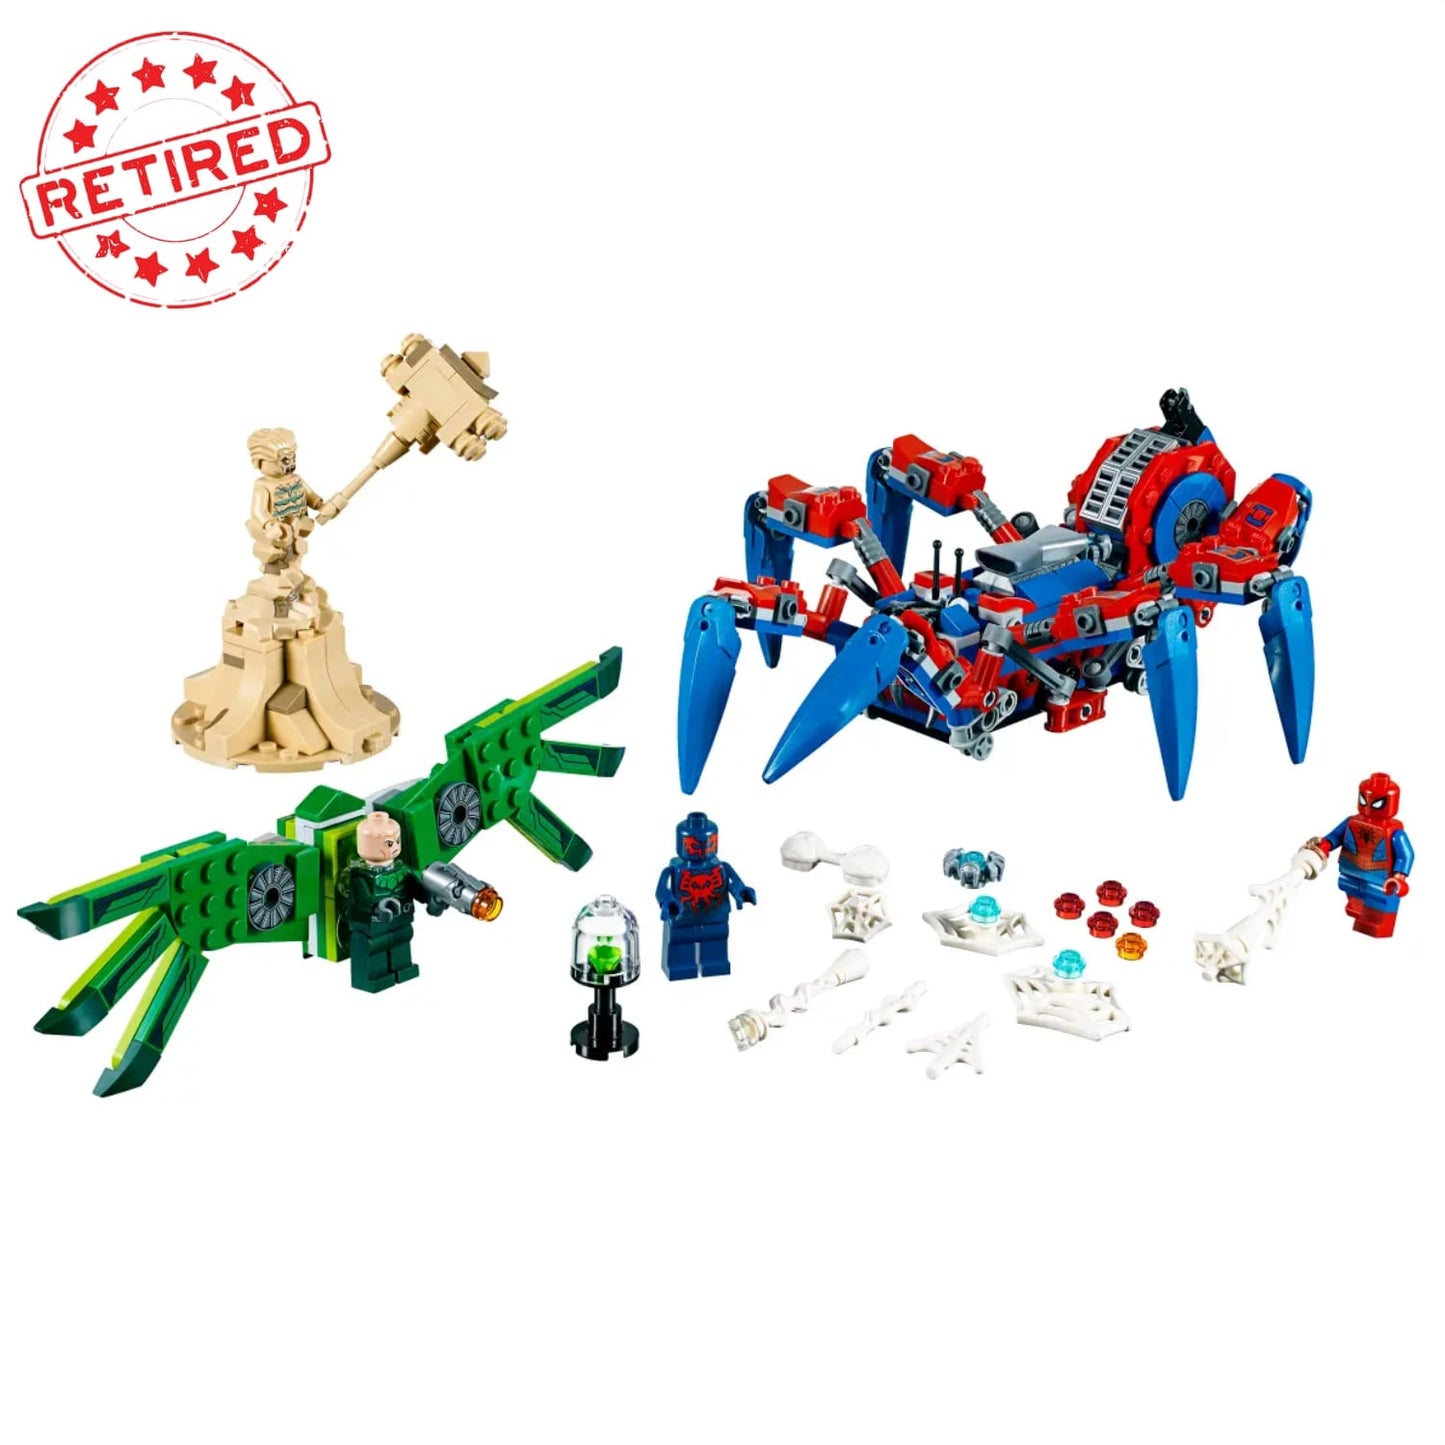 Lego 76114 Marvel Spider-Man Spider Crawler